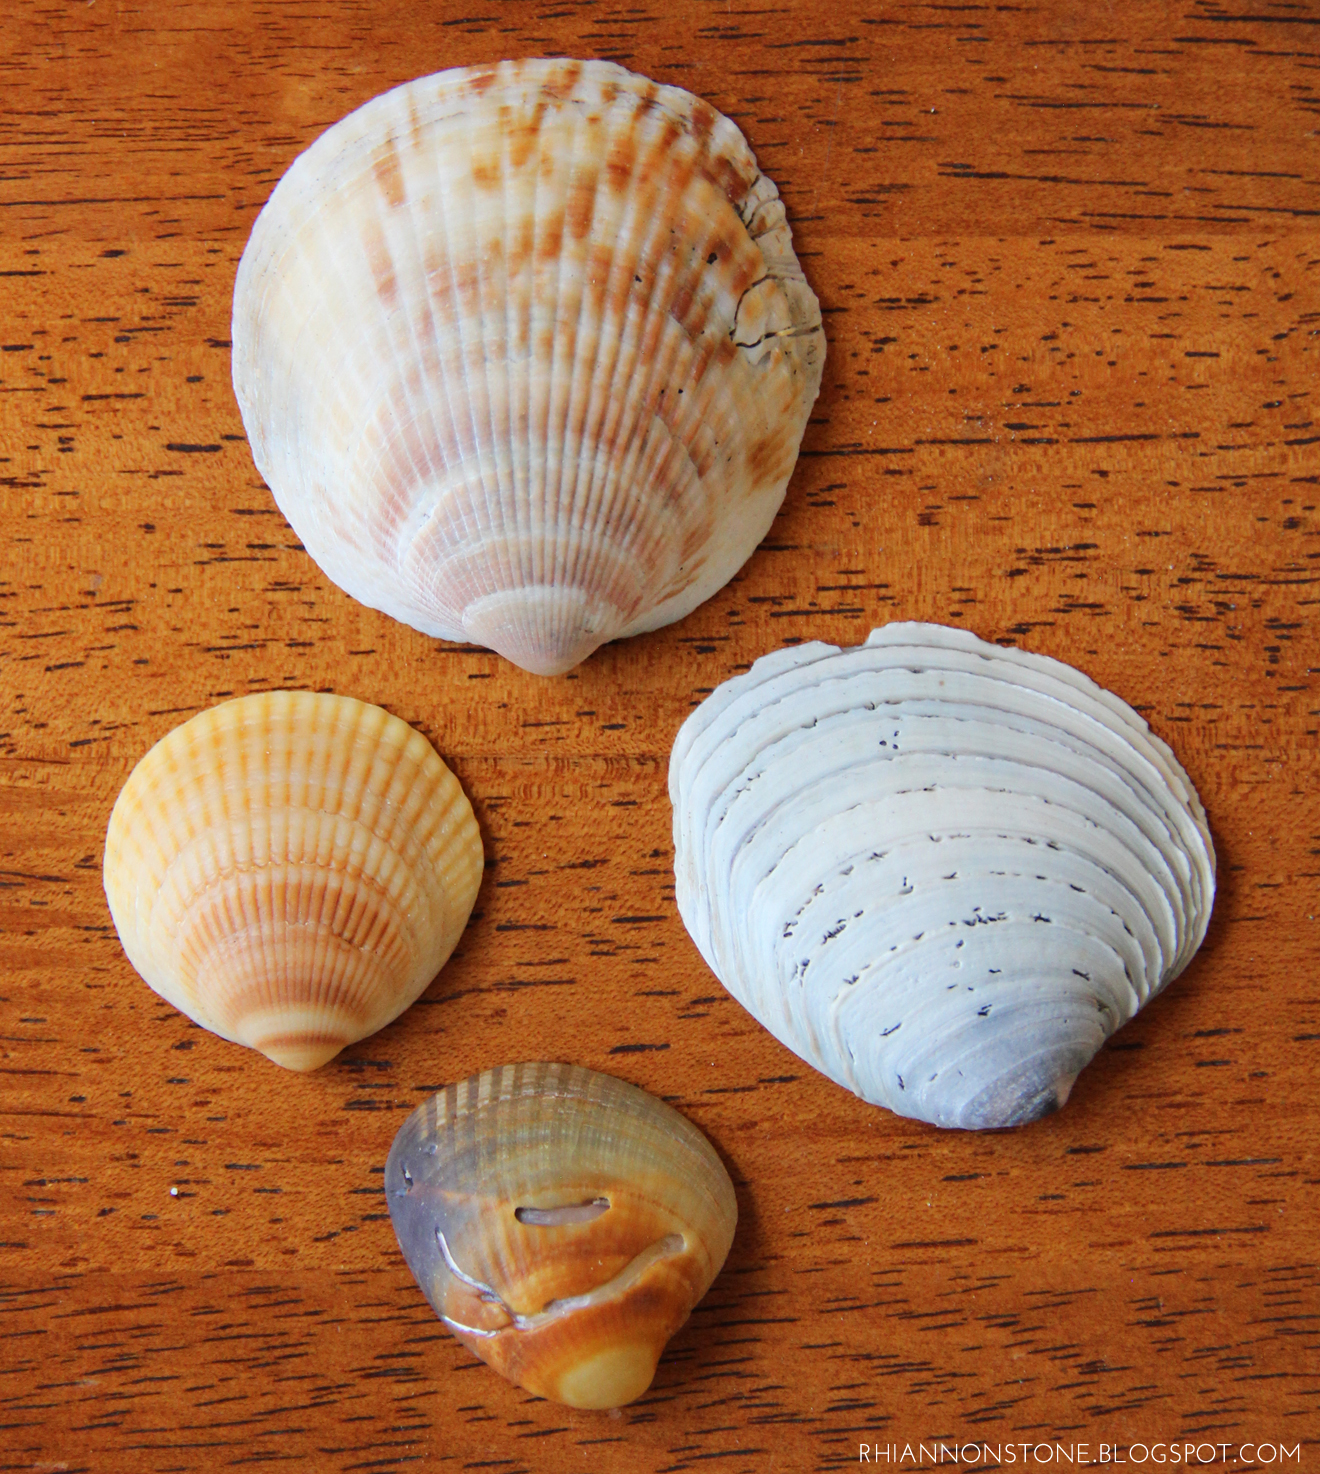 Shells from Takapuna Beach, Auckland